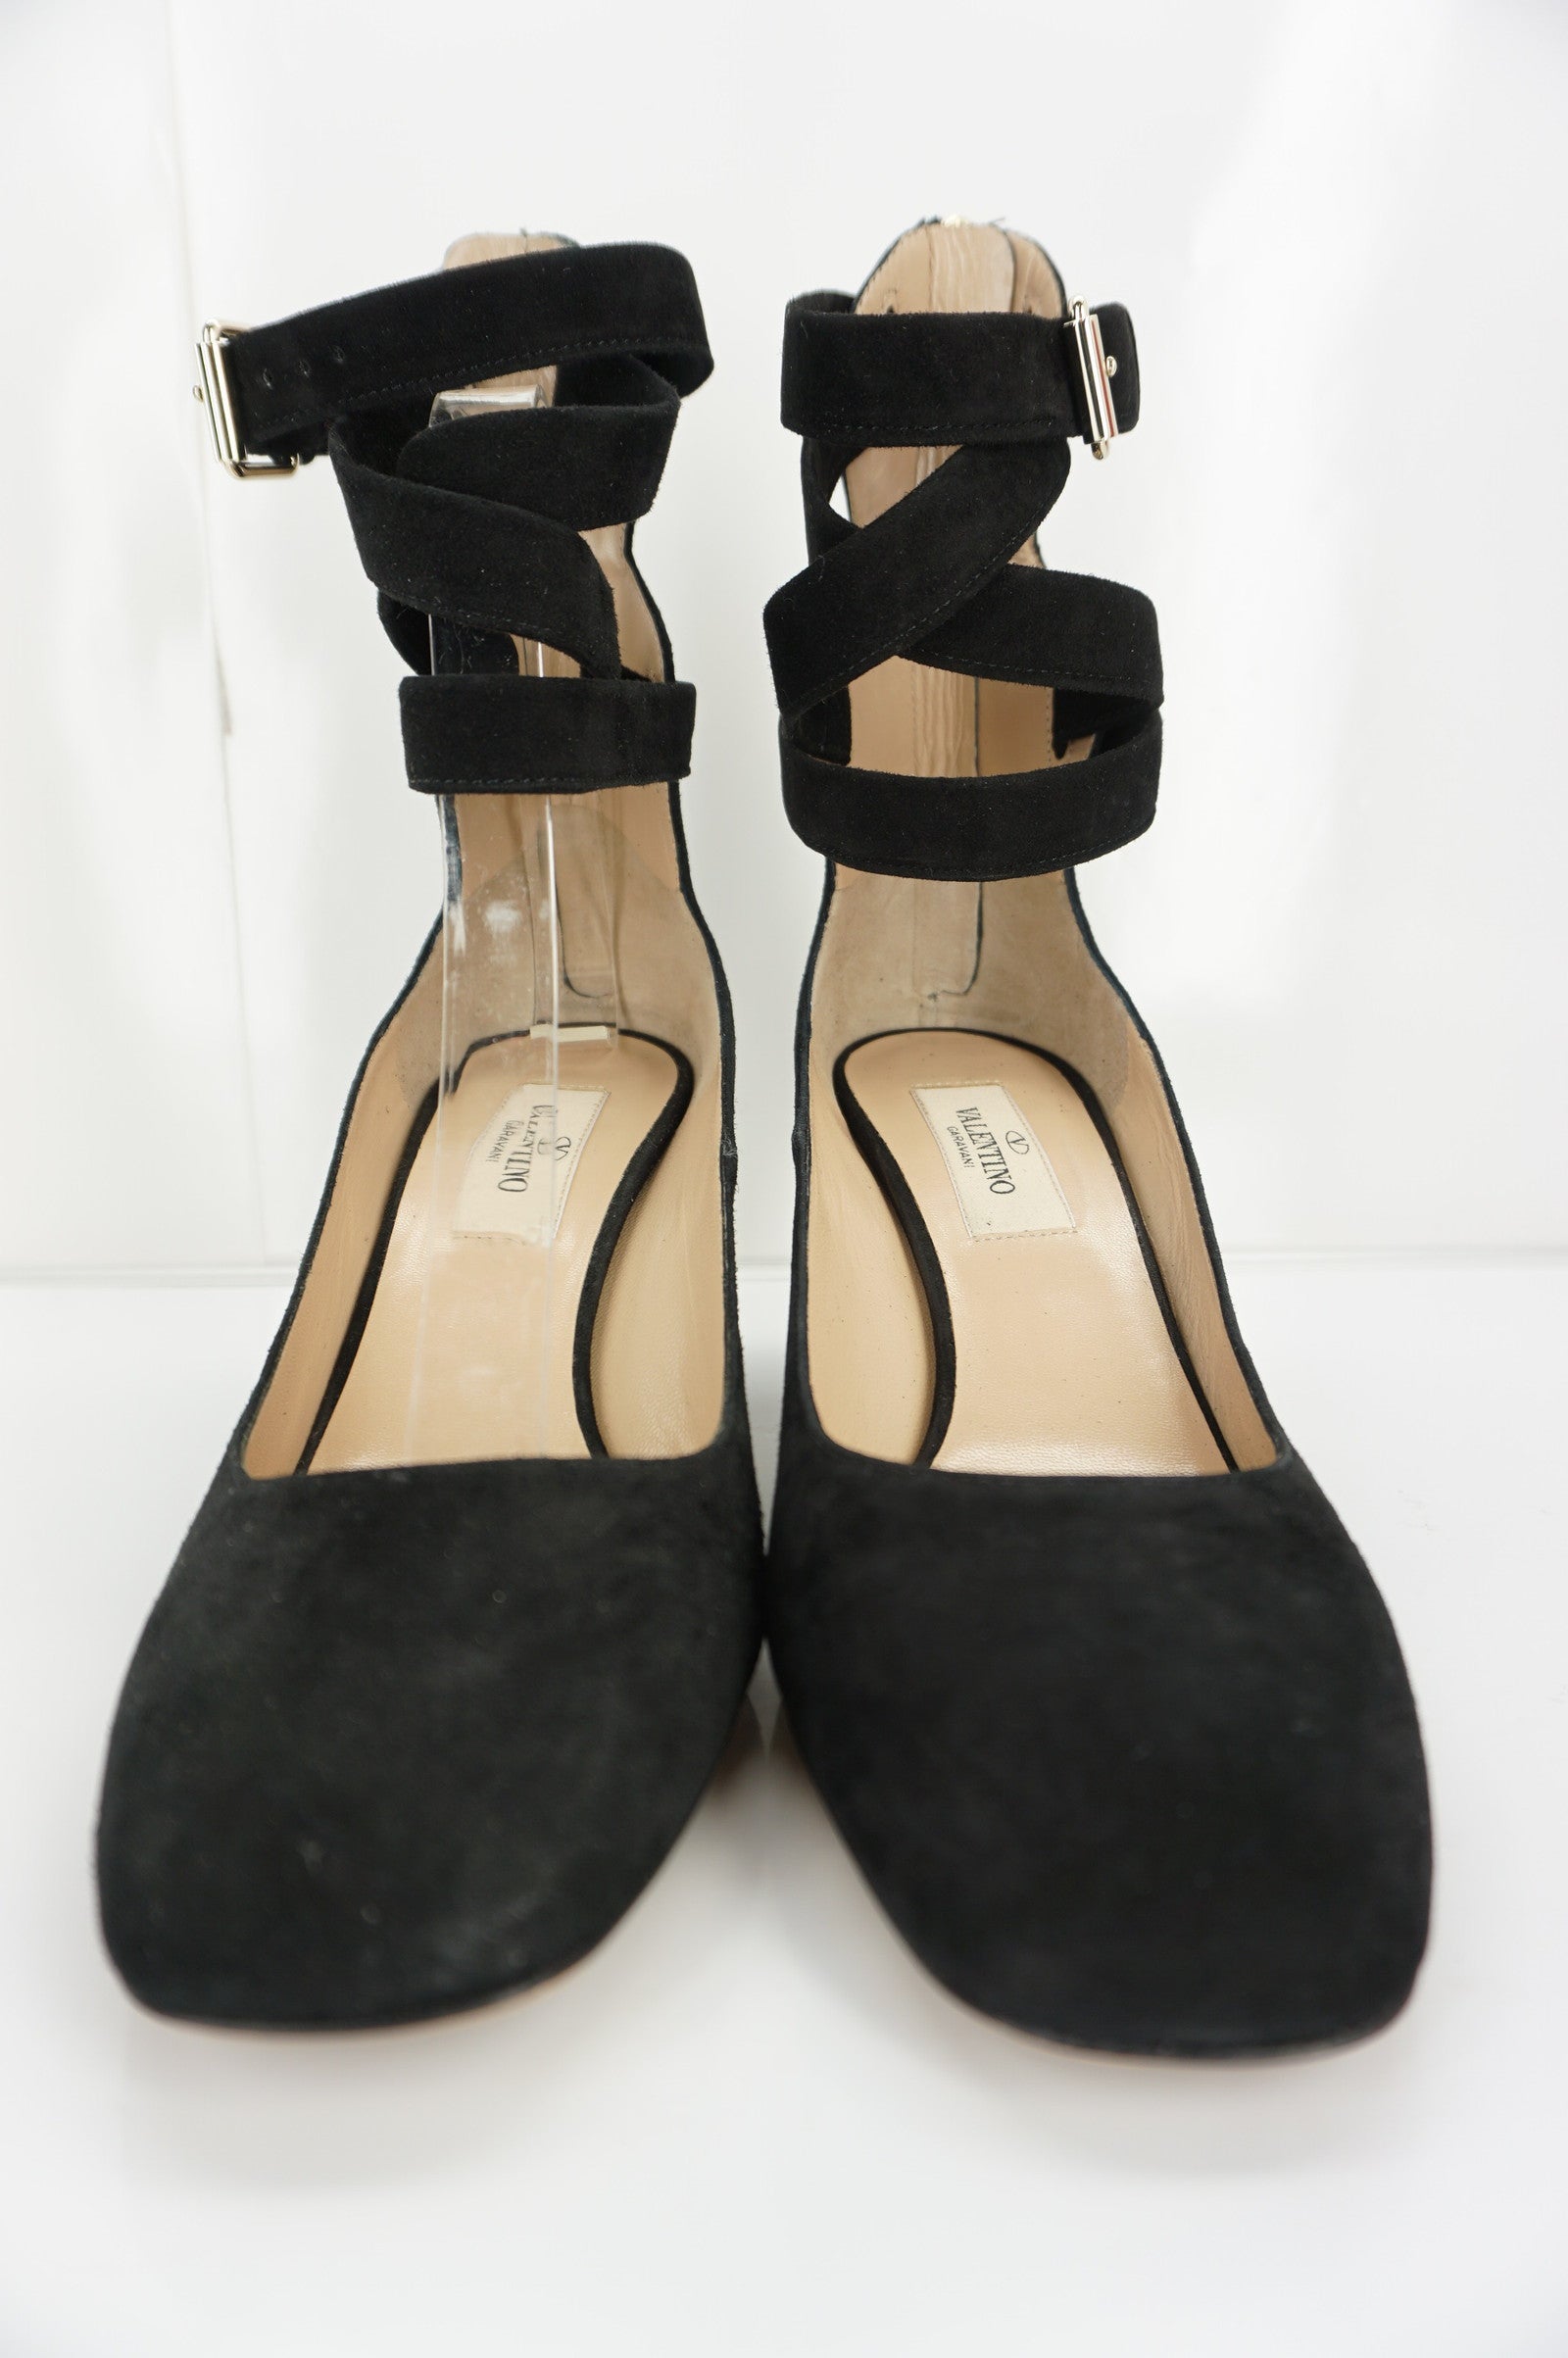 Valentino Plum Ankle Wrap Block Heel Sandal SZ 36.5 Black Suede $995 NIB